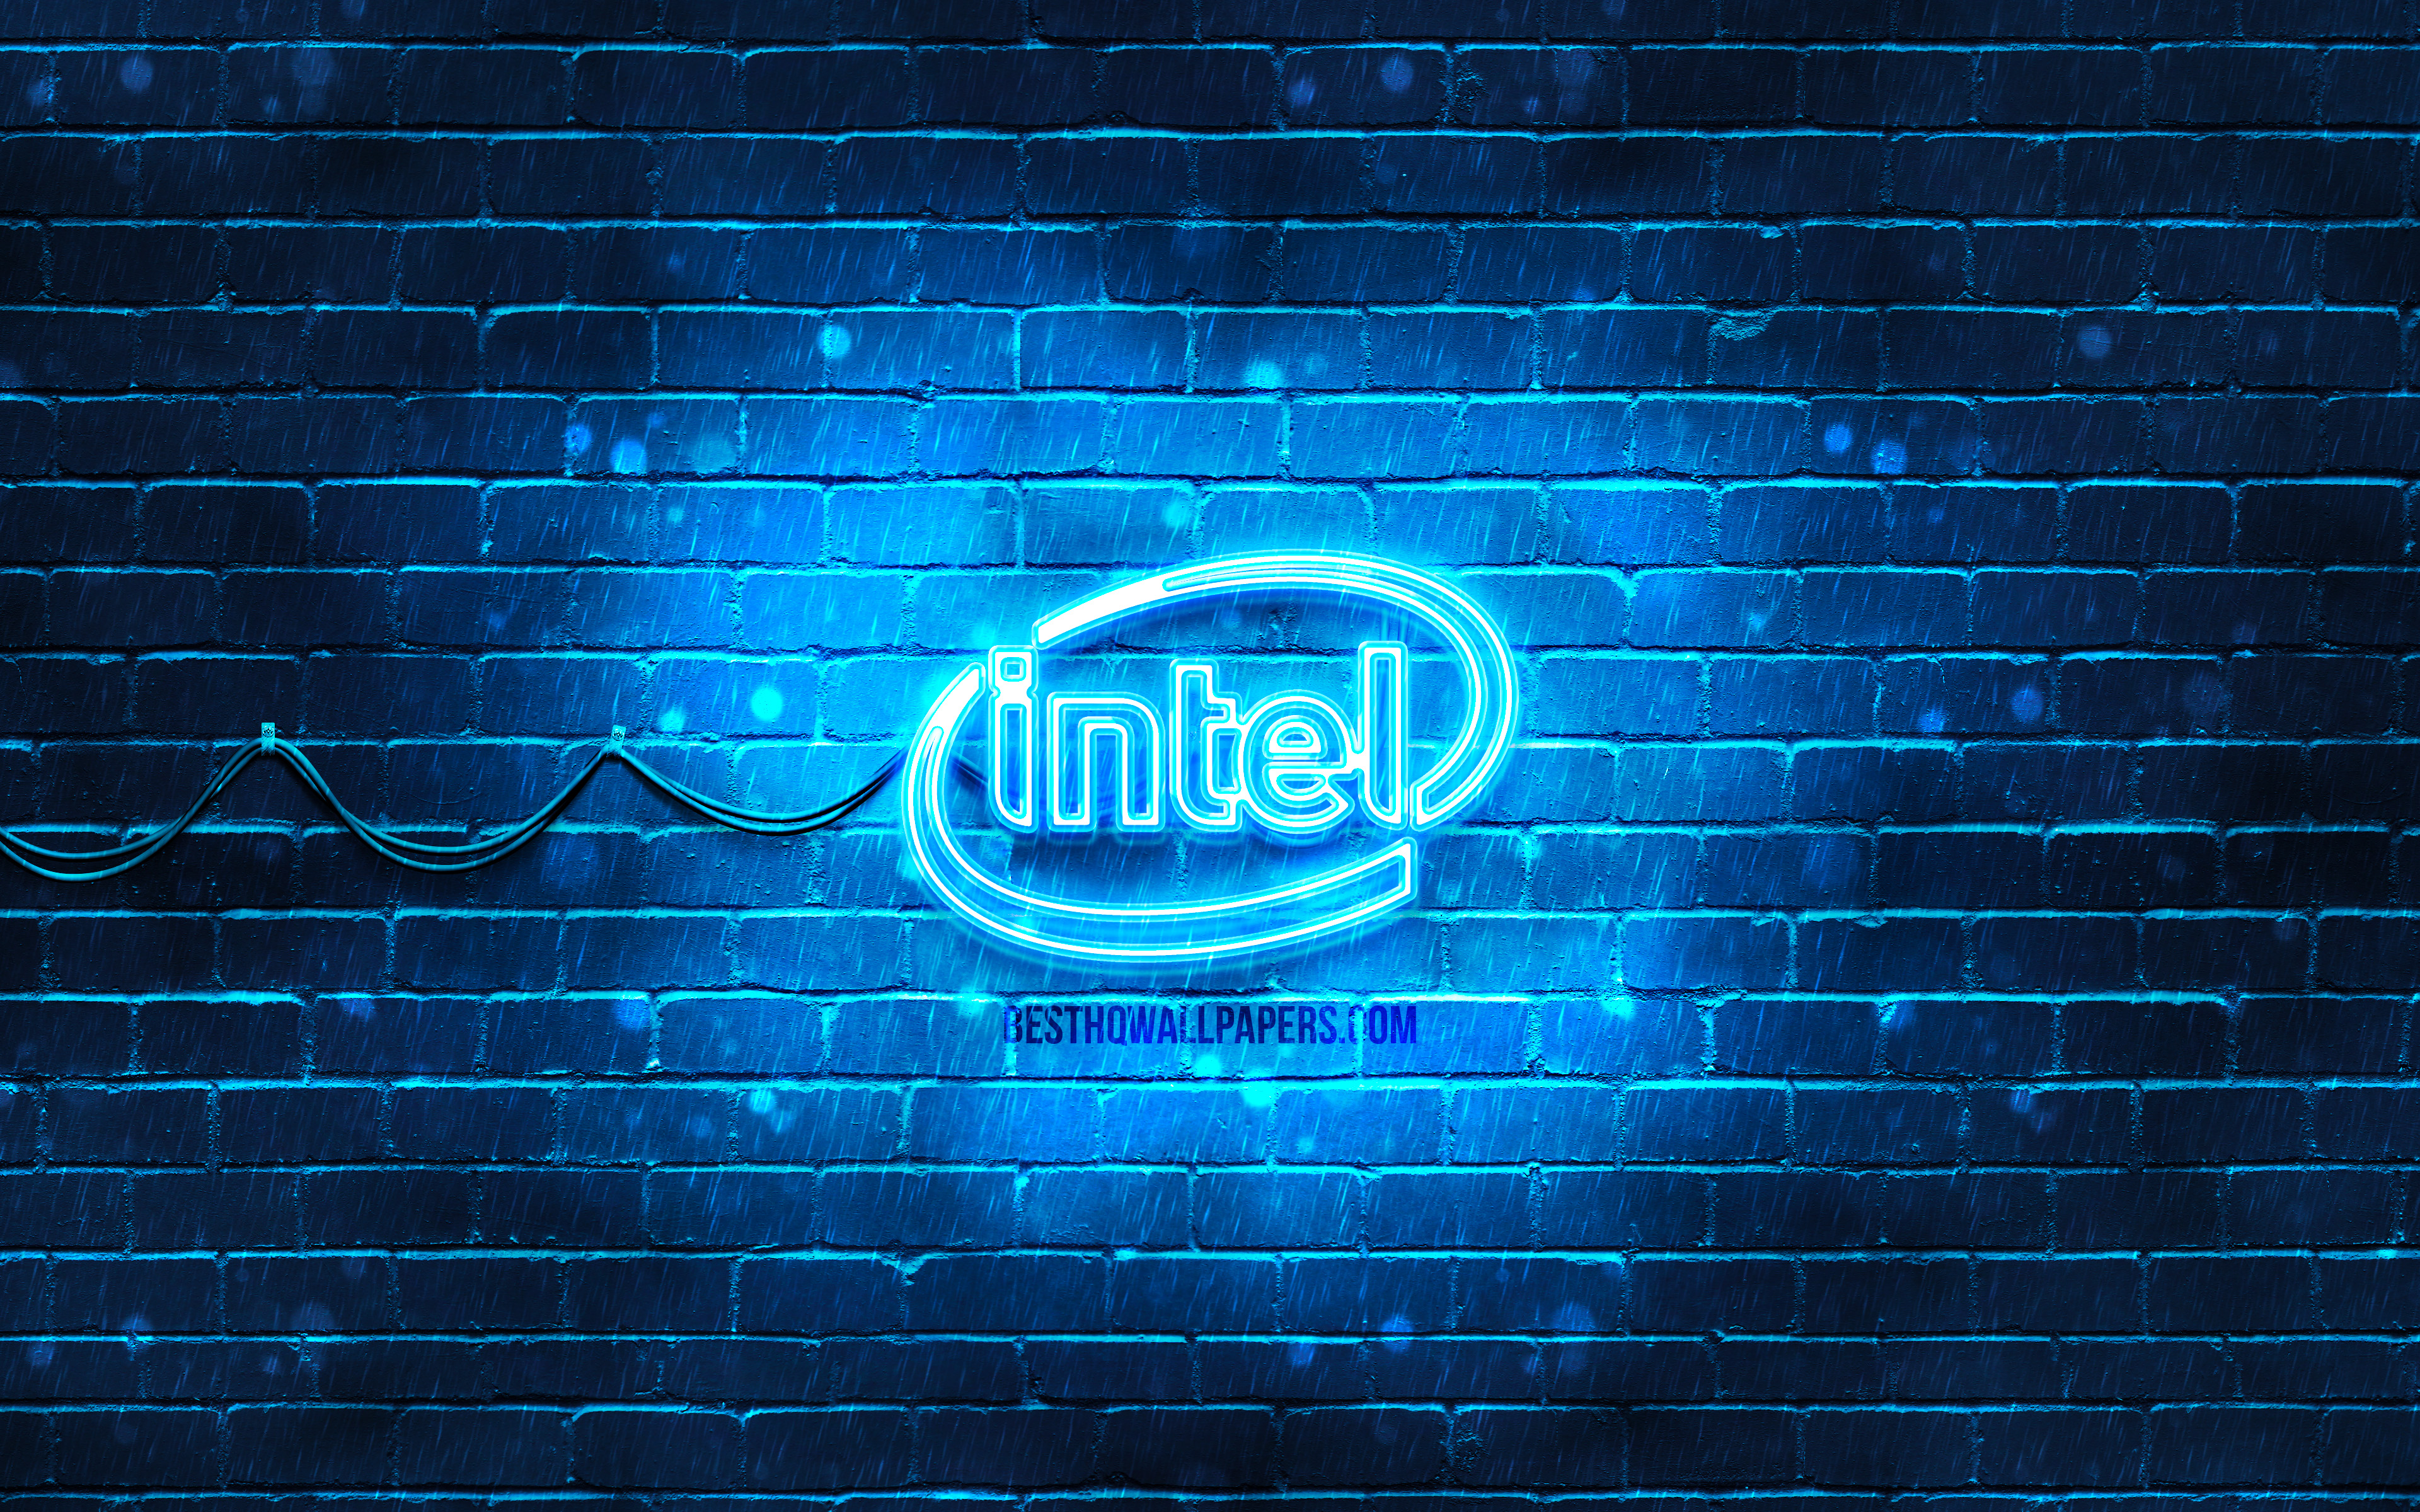 Download wallpaper Intel blue logo, 4k, blue brickwall, Intel logo, brands, Intel neon logo, Intel for desktop with resolution 3840x2400. High Quality HD picture wallpaper